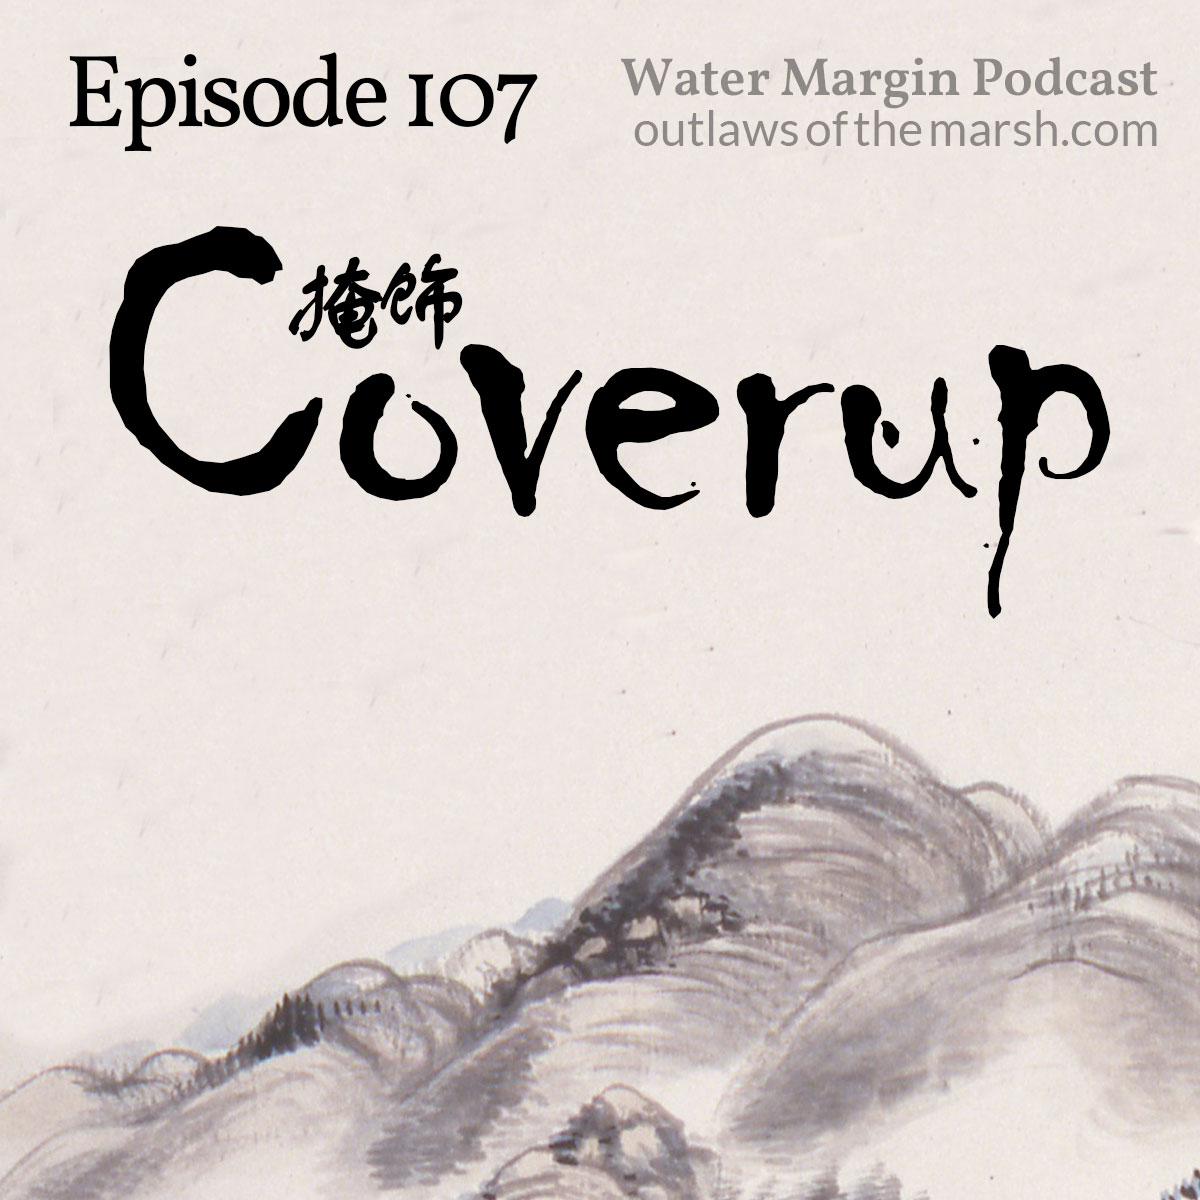 Water Margin Podcast: Episode 107